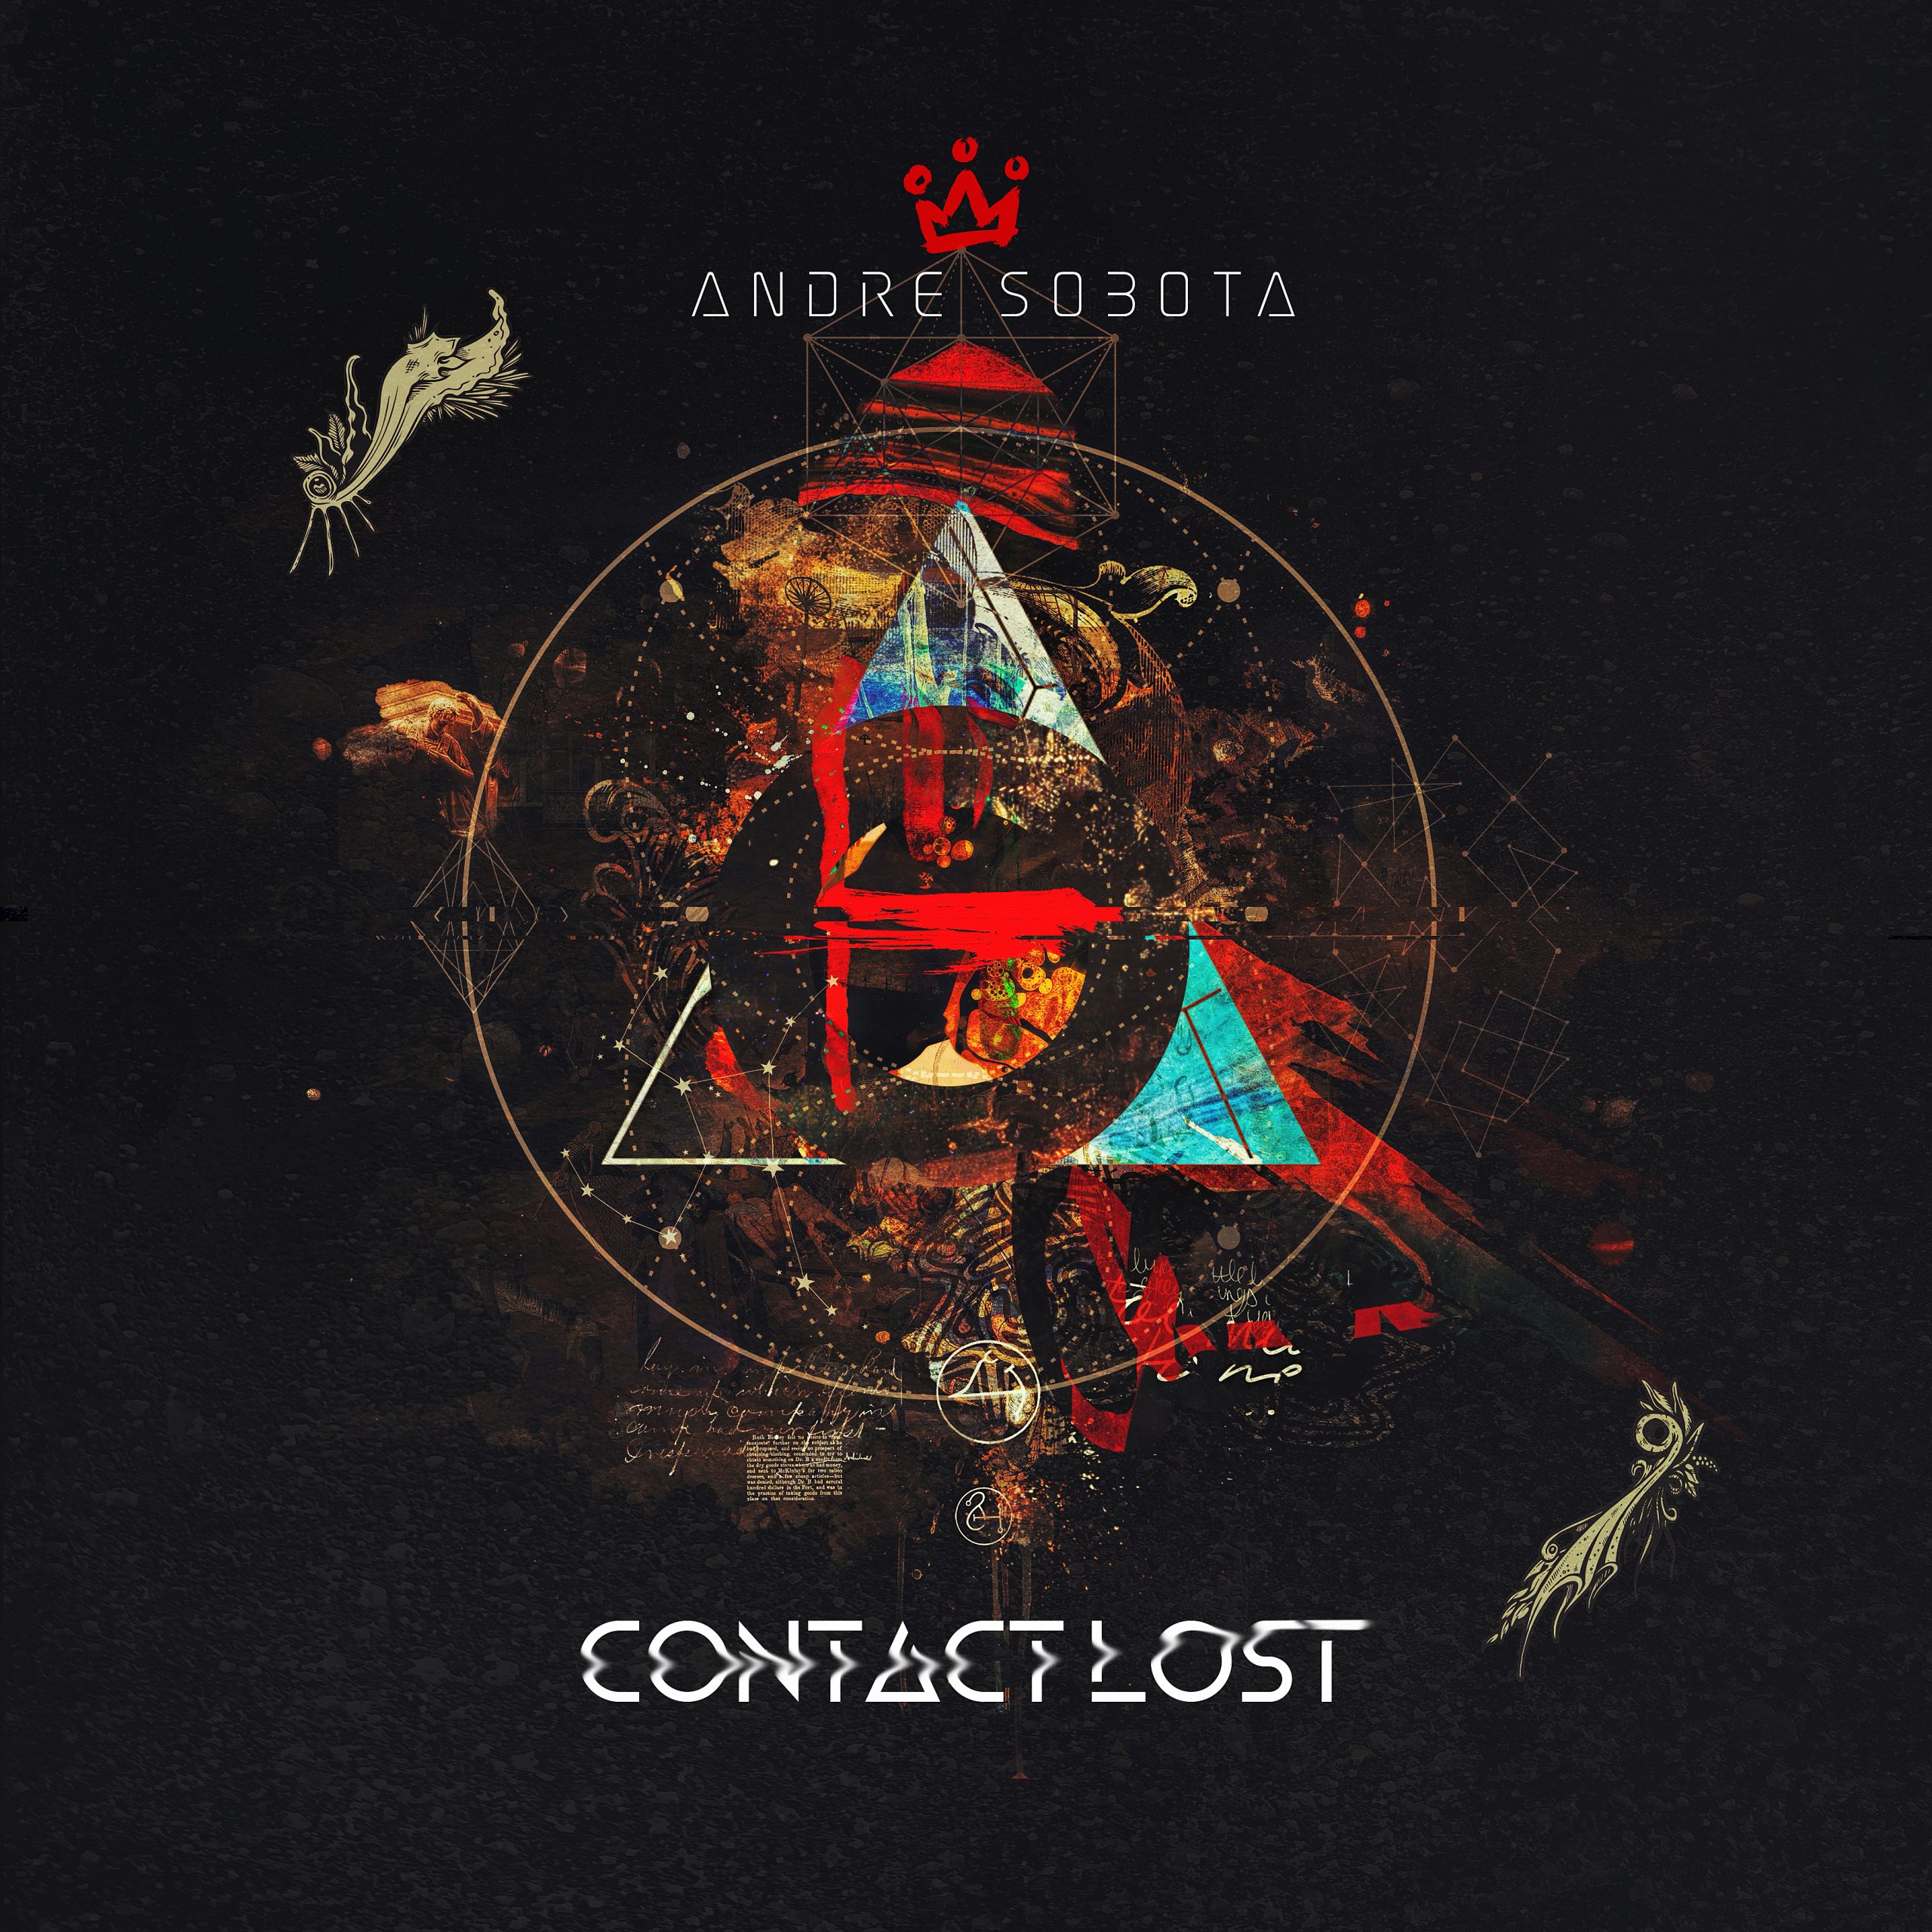 Andre Sobota Contact Lost Album Artwork Cover Design